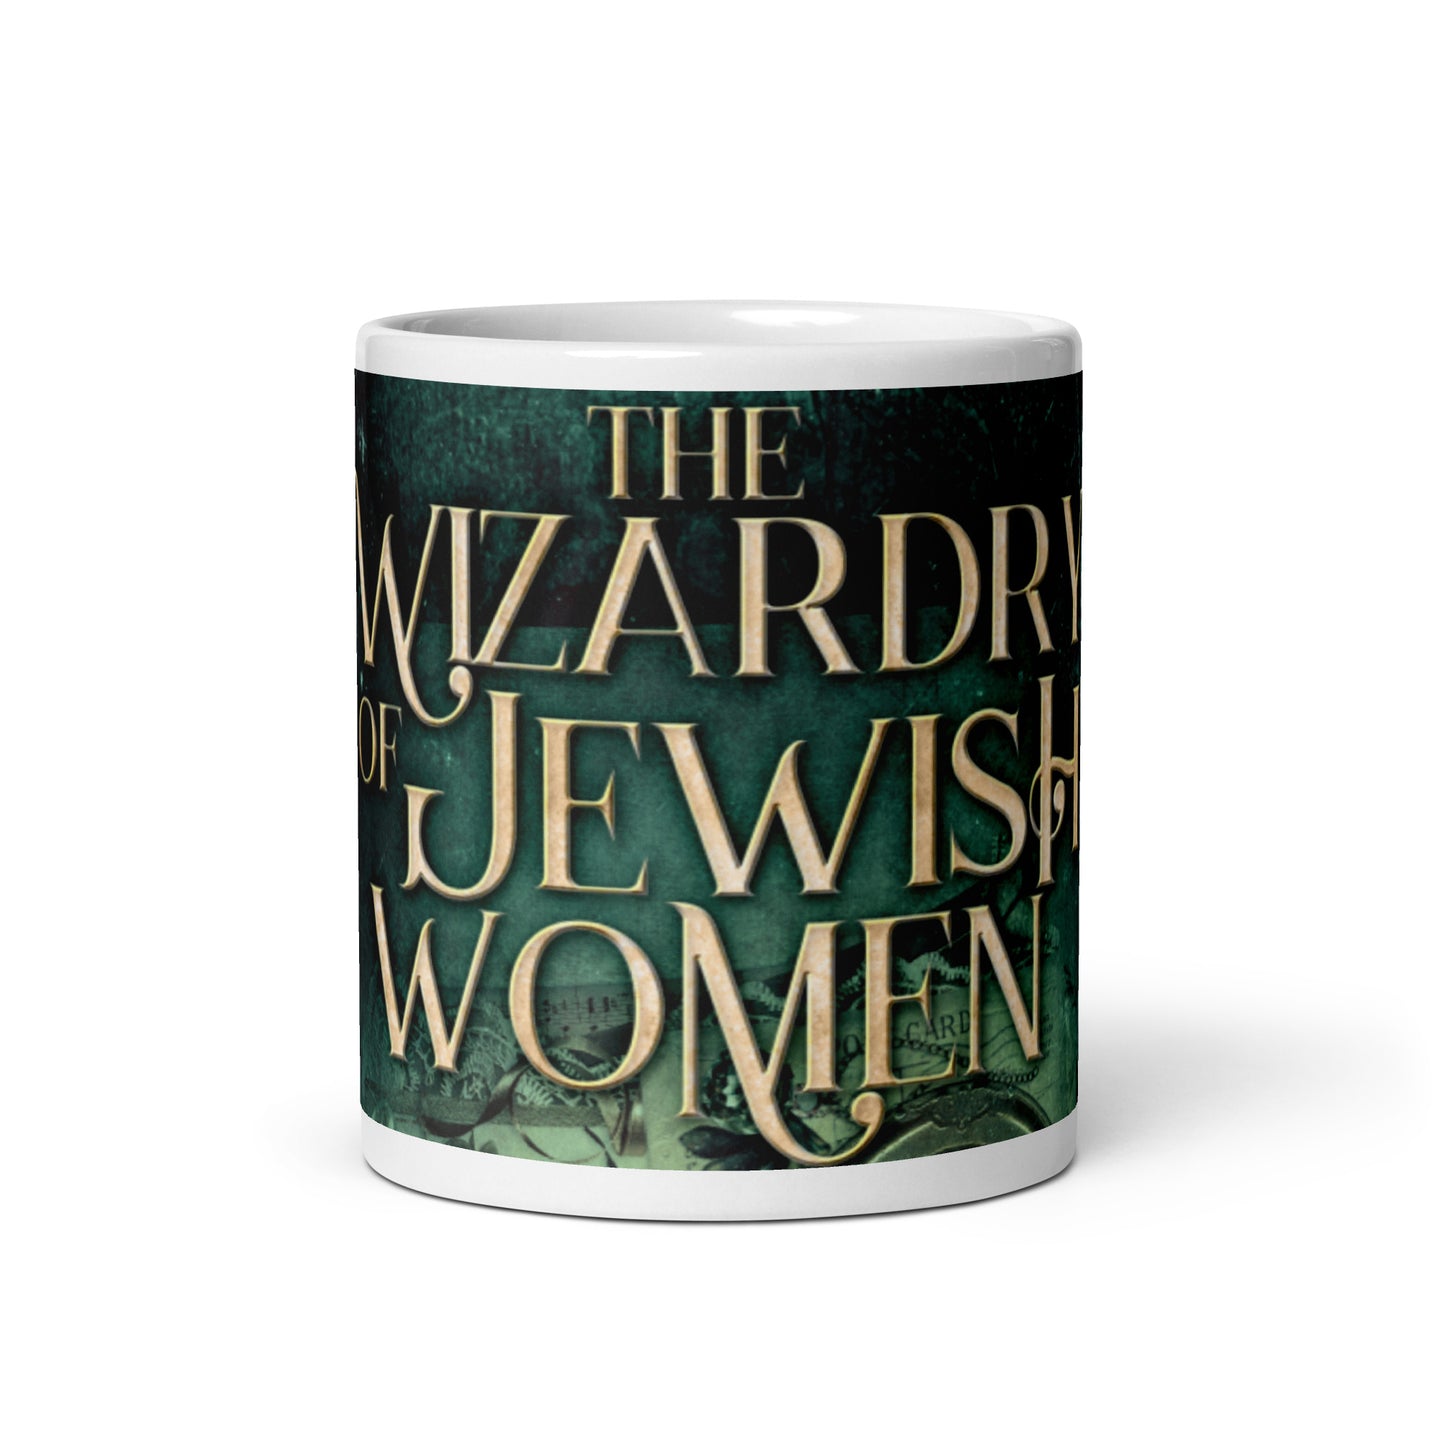 The Wizardry of Jewish Women - White Coffee Mug